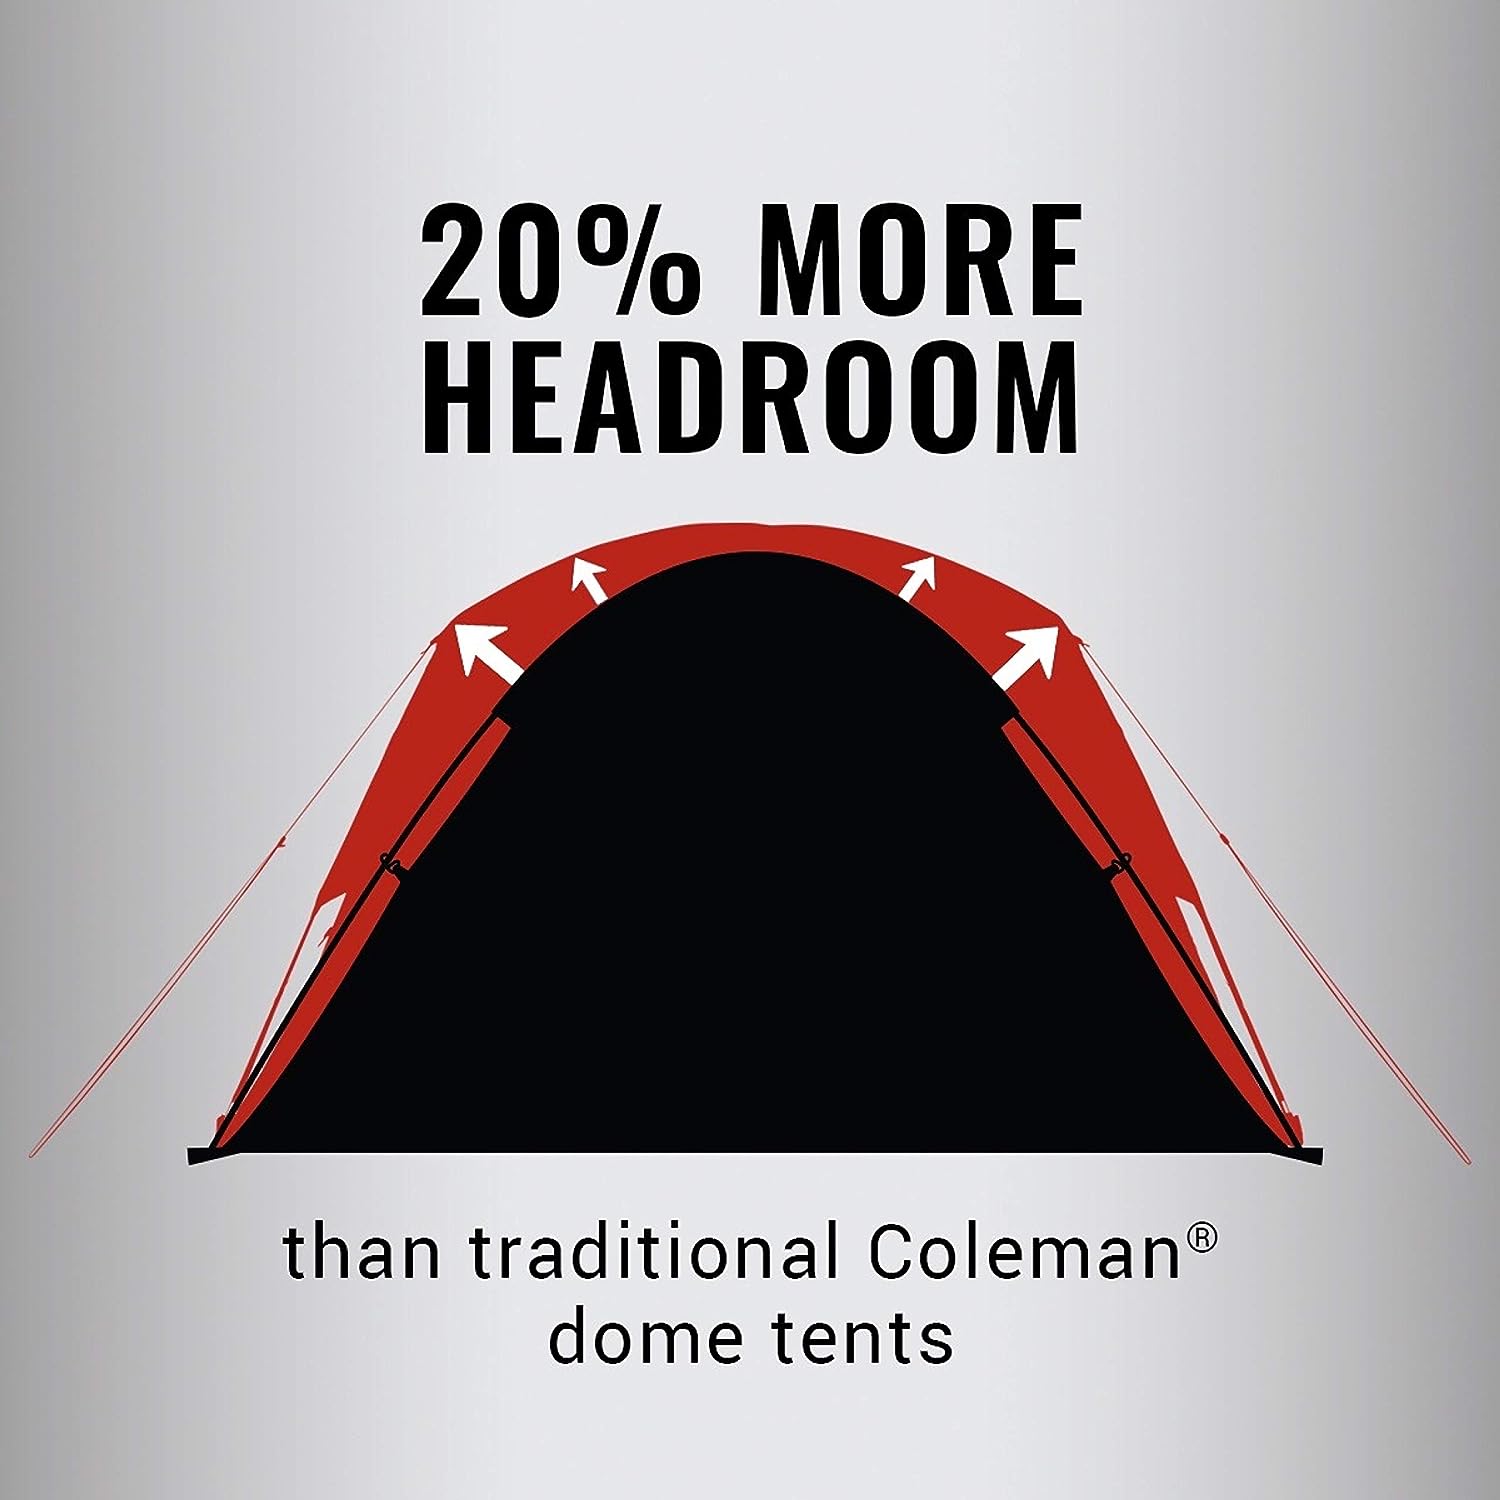 coleman dome tent headroom